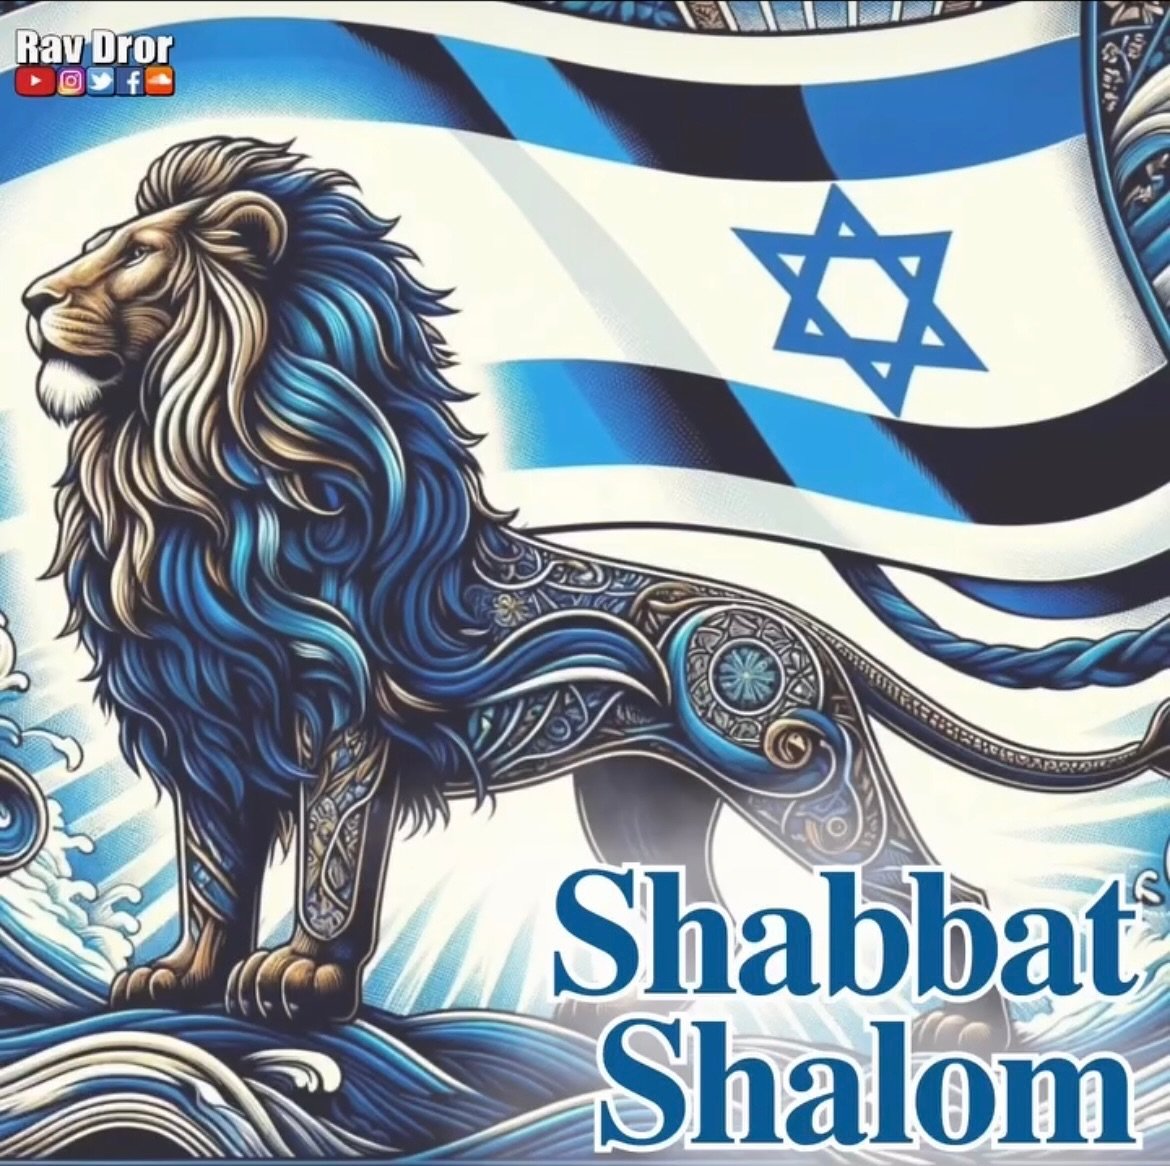 Shabbat shalom! Hope you&rsquo;re having a beautiful Passover🙏🏽

#ravdror #emunah #shabbatshalom #passover #jewishandproud